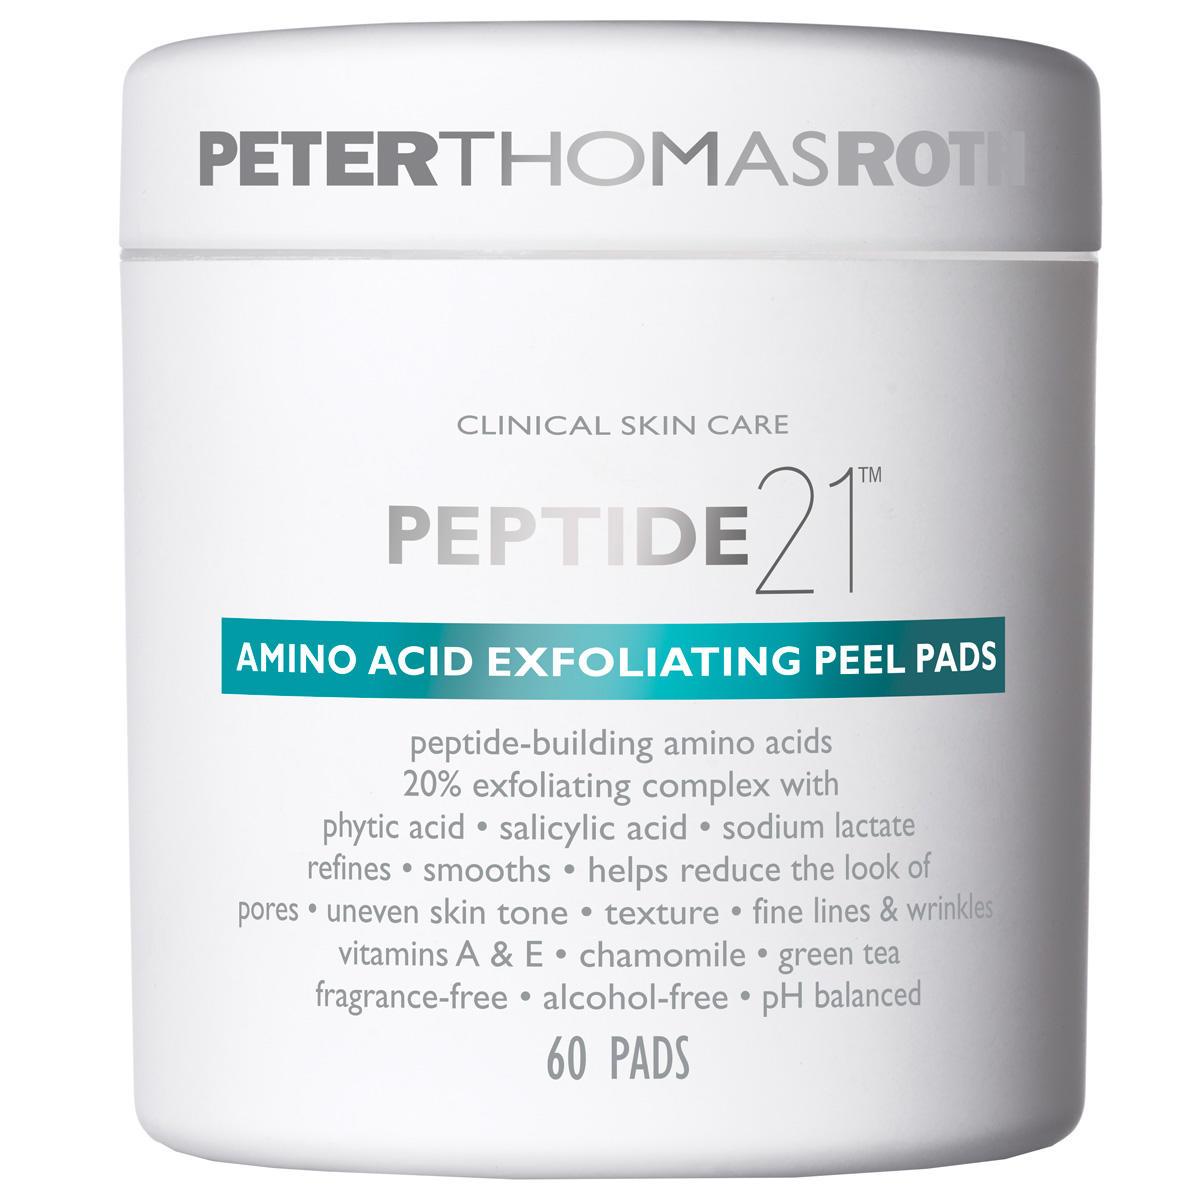 PETER THOMAS ROTH CLINICAL SKIN CARE Peptide 21 Amino Acid Exfoliating Peel Pads 60 Stück - 1